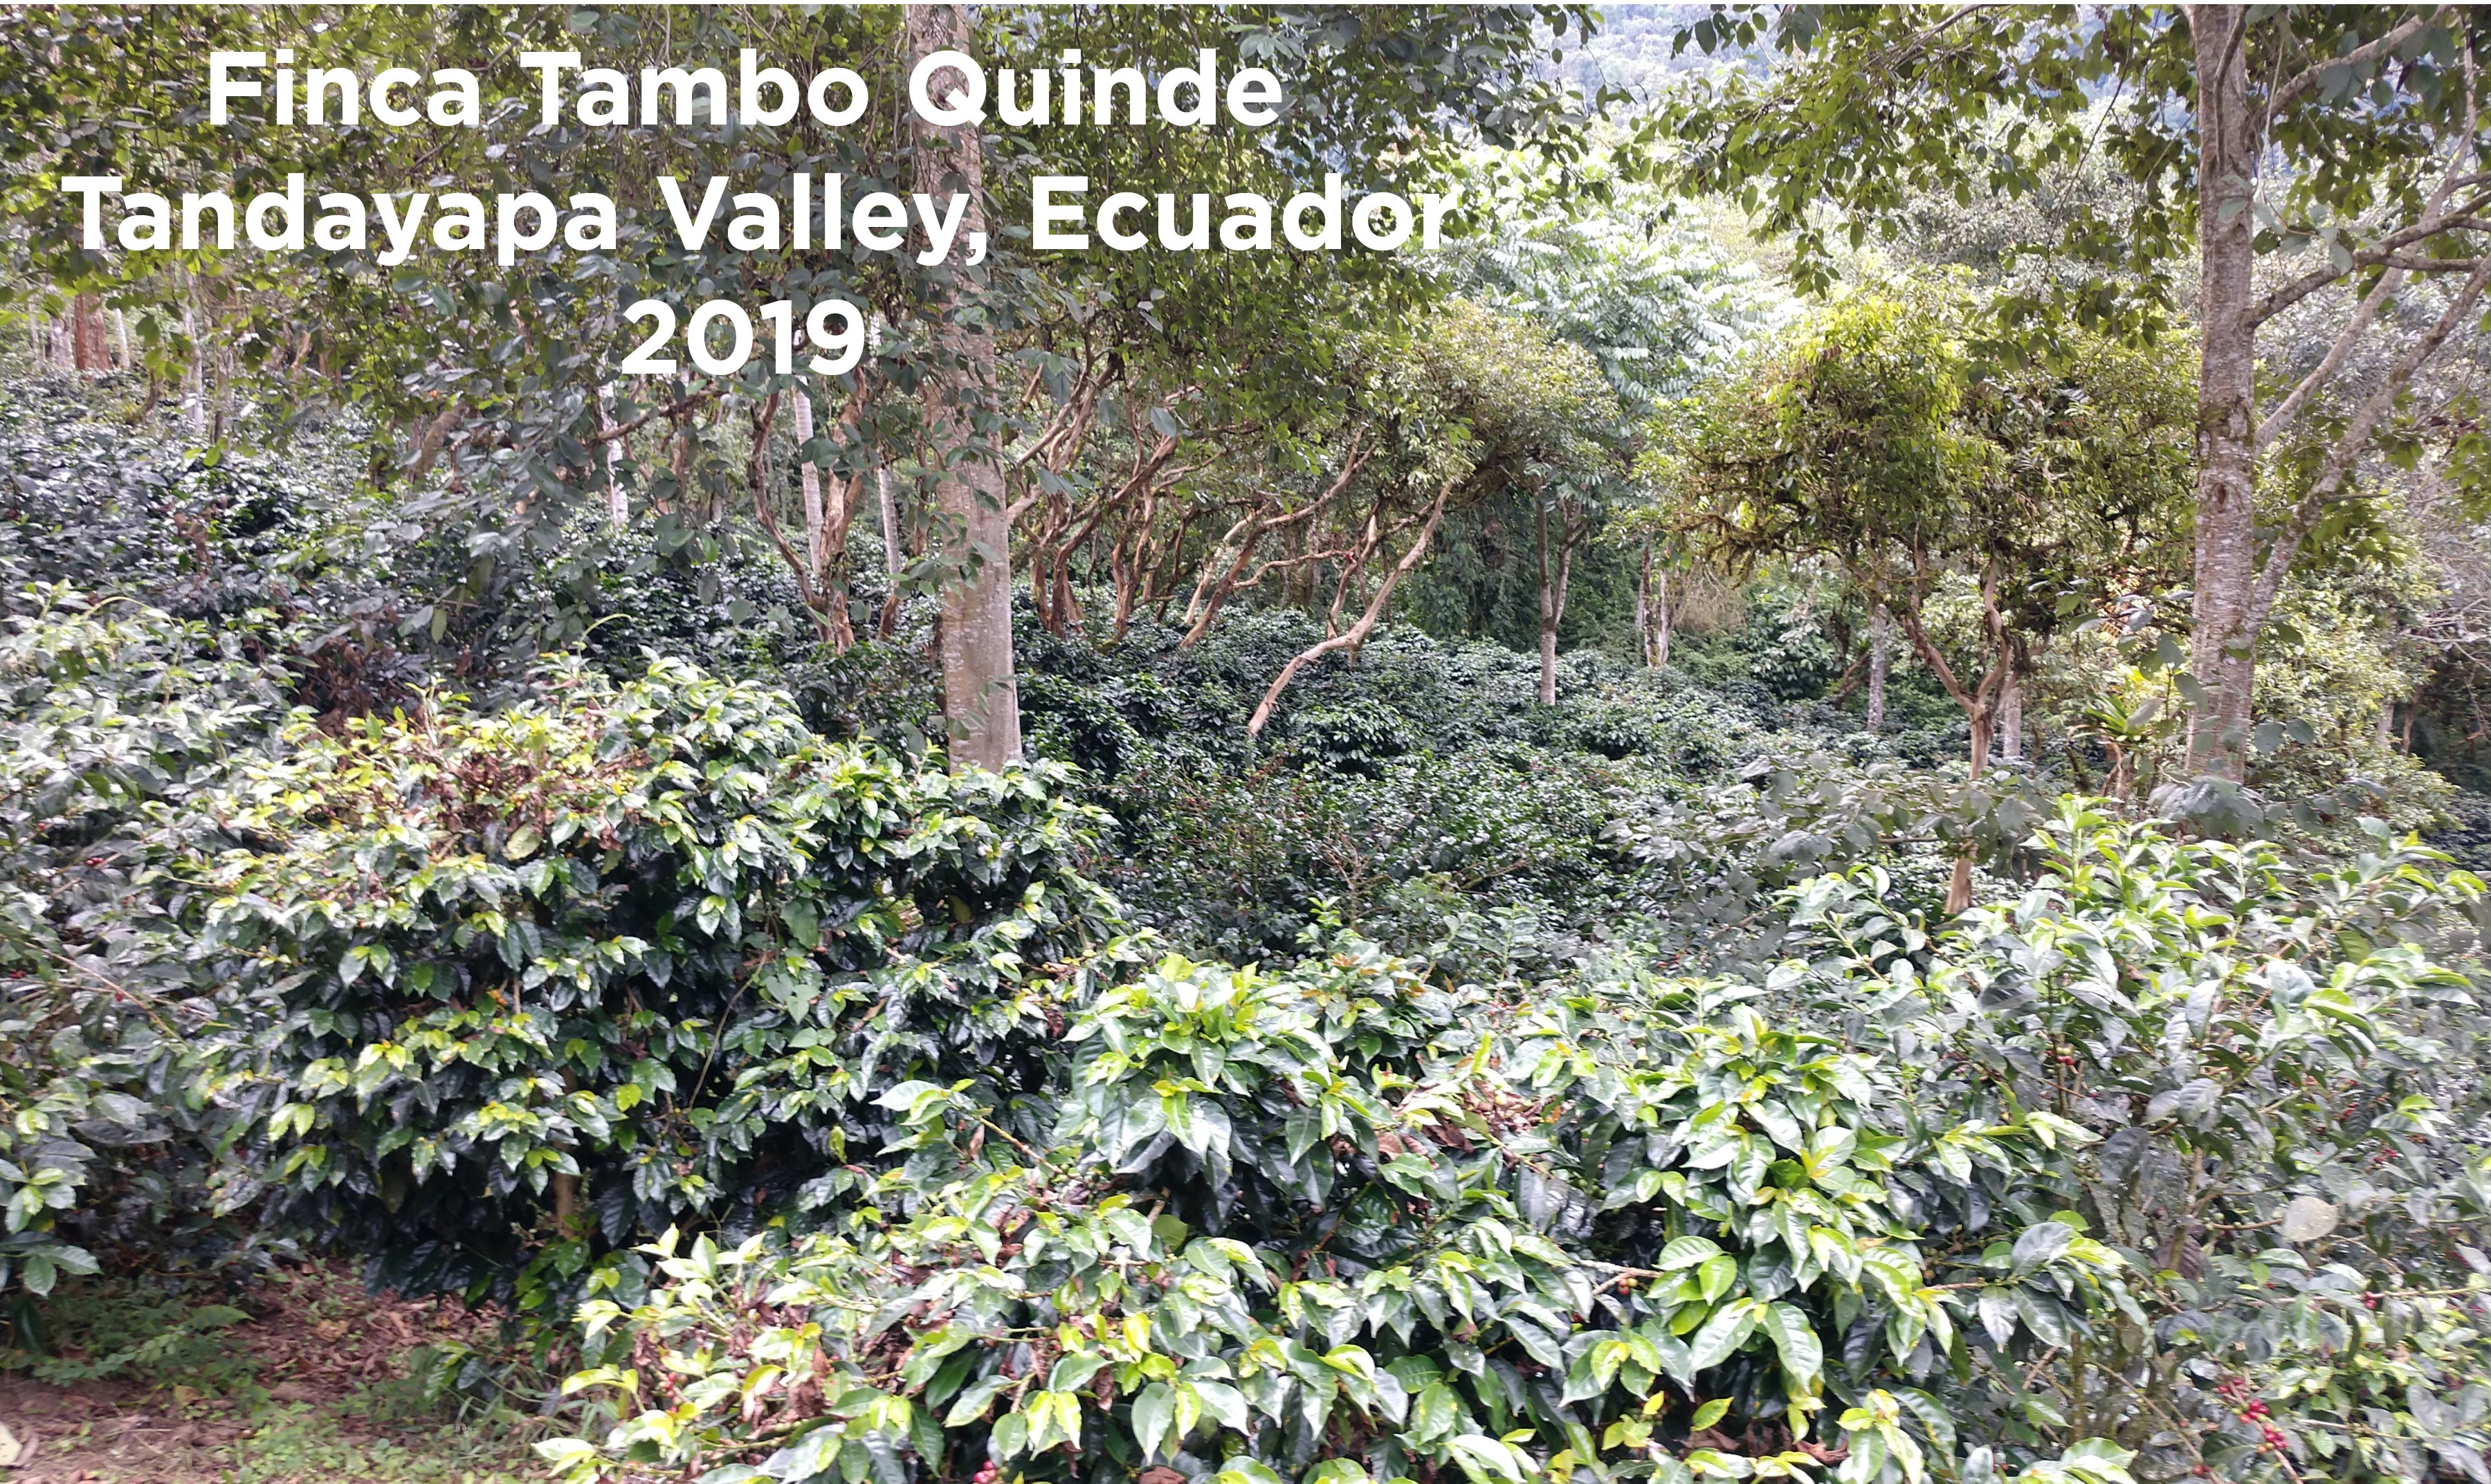 Coffee Finca Tambo Quinde Ecuador 2019